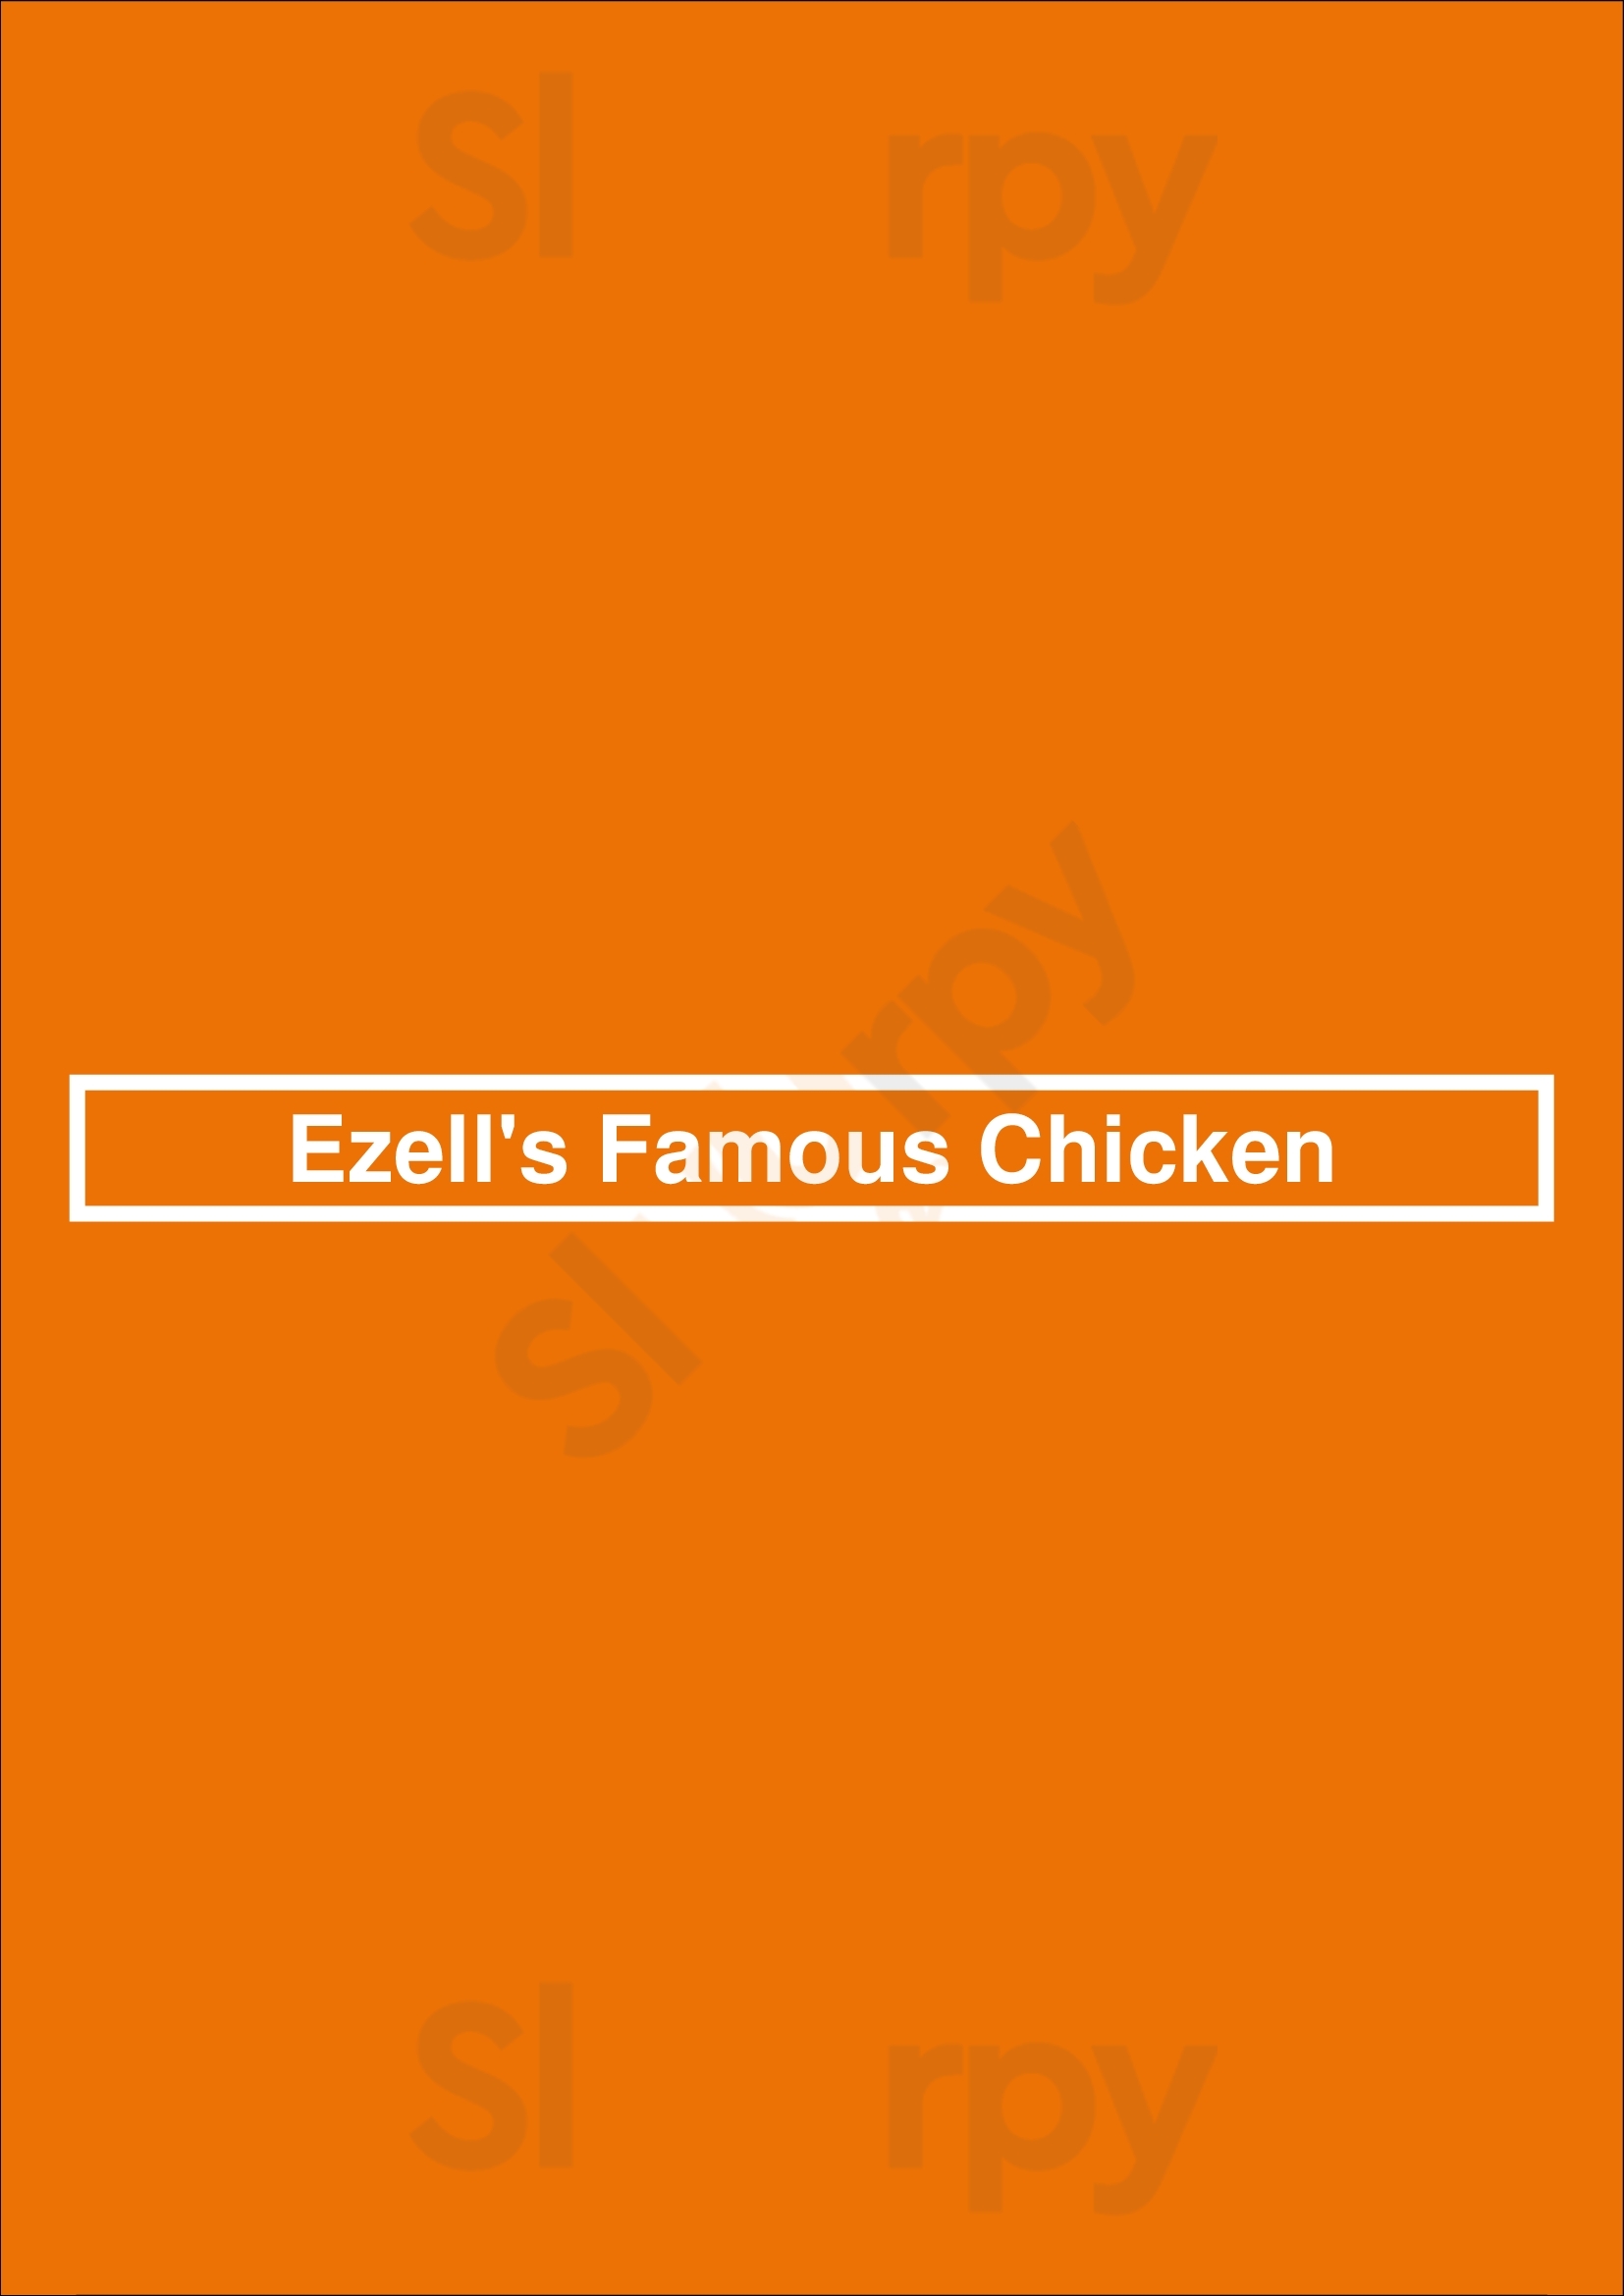 Ezell's Famous Chicken Renton Menu - 1